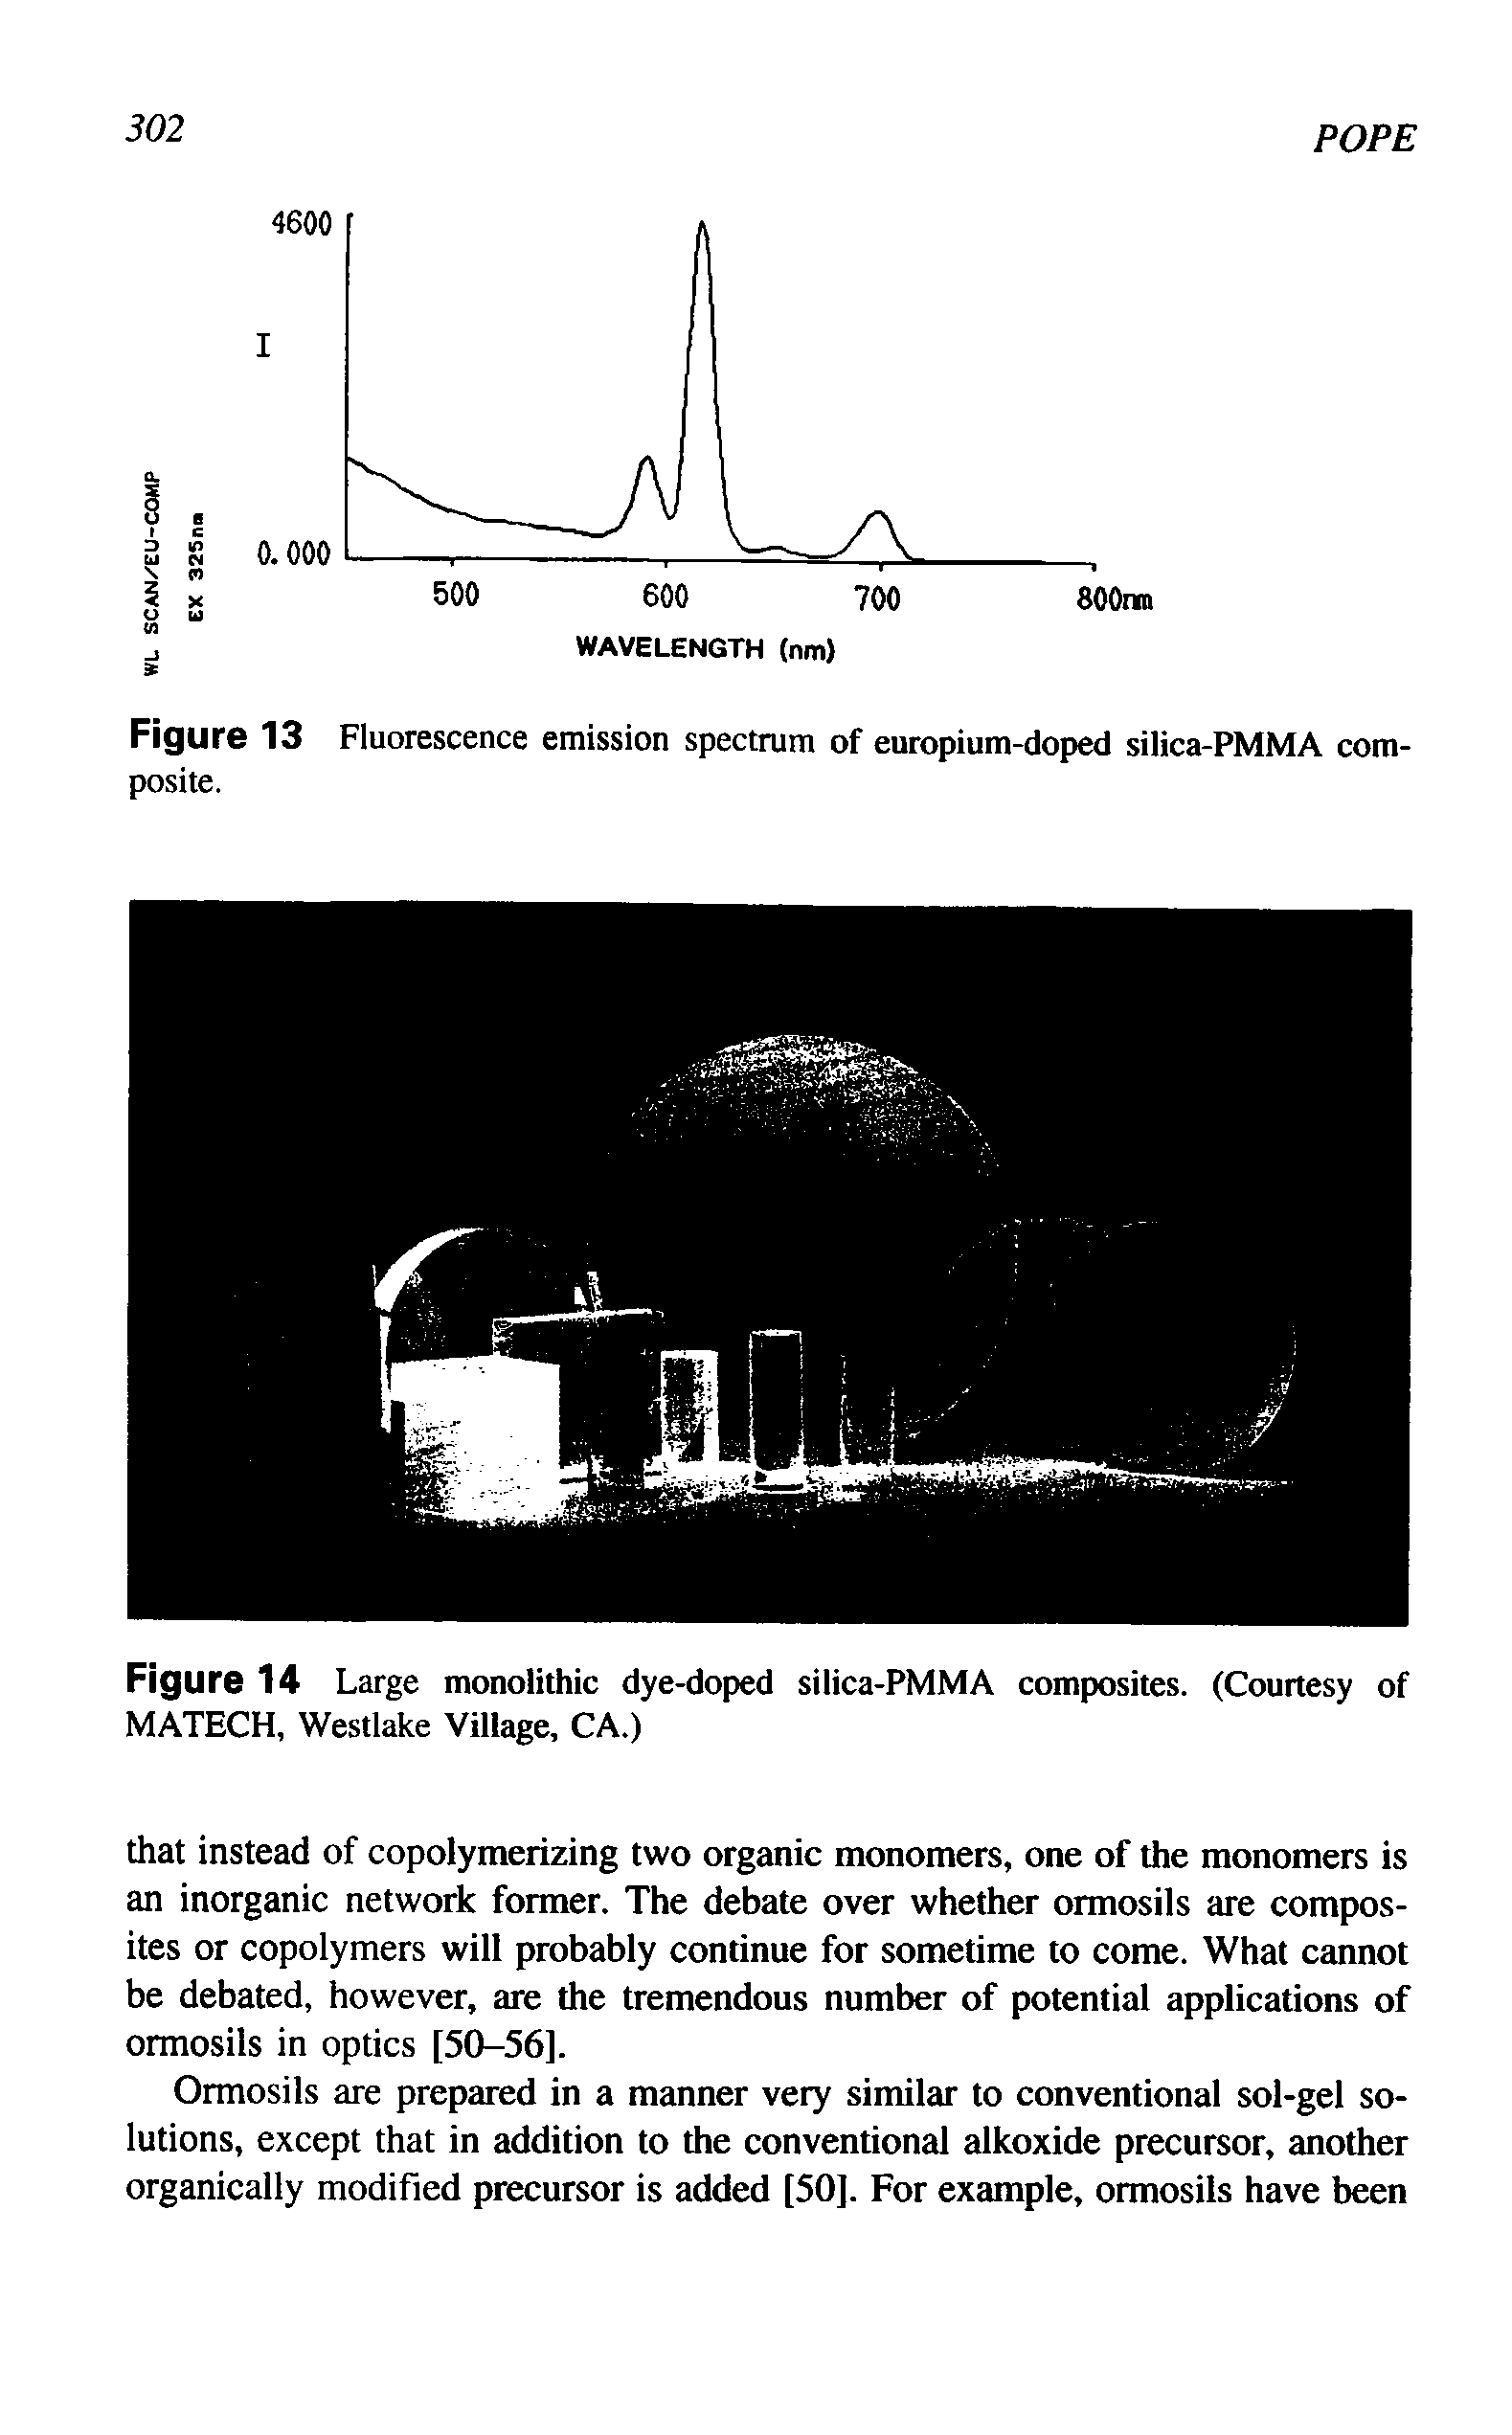 Figure 13 Fluorescence emission spectrum of europium-doped silica-PMMA composite.